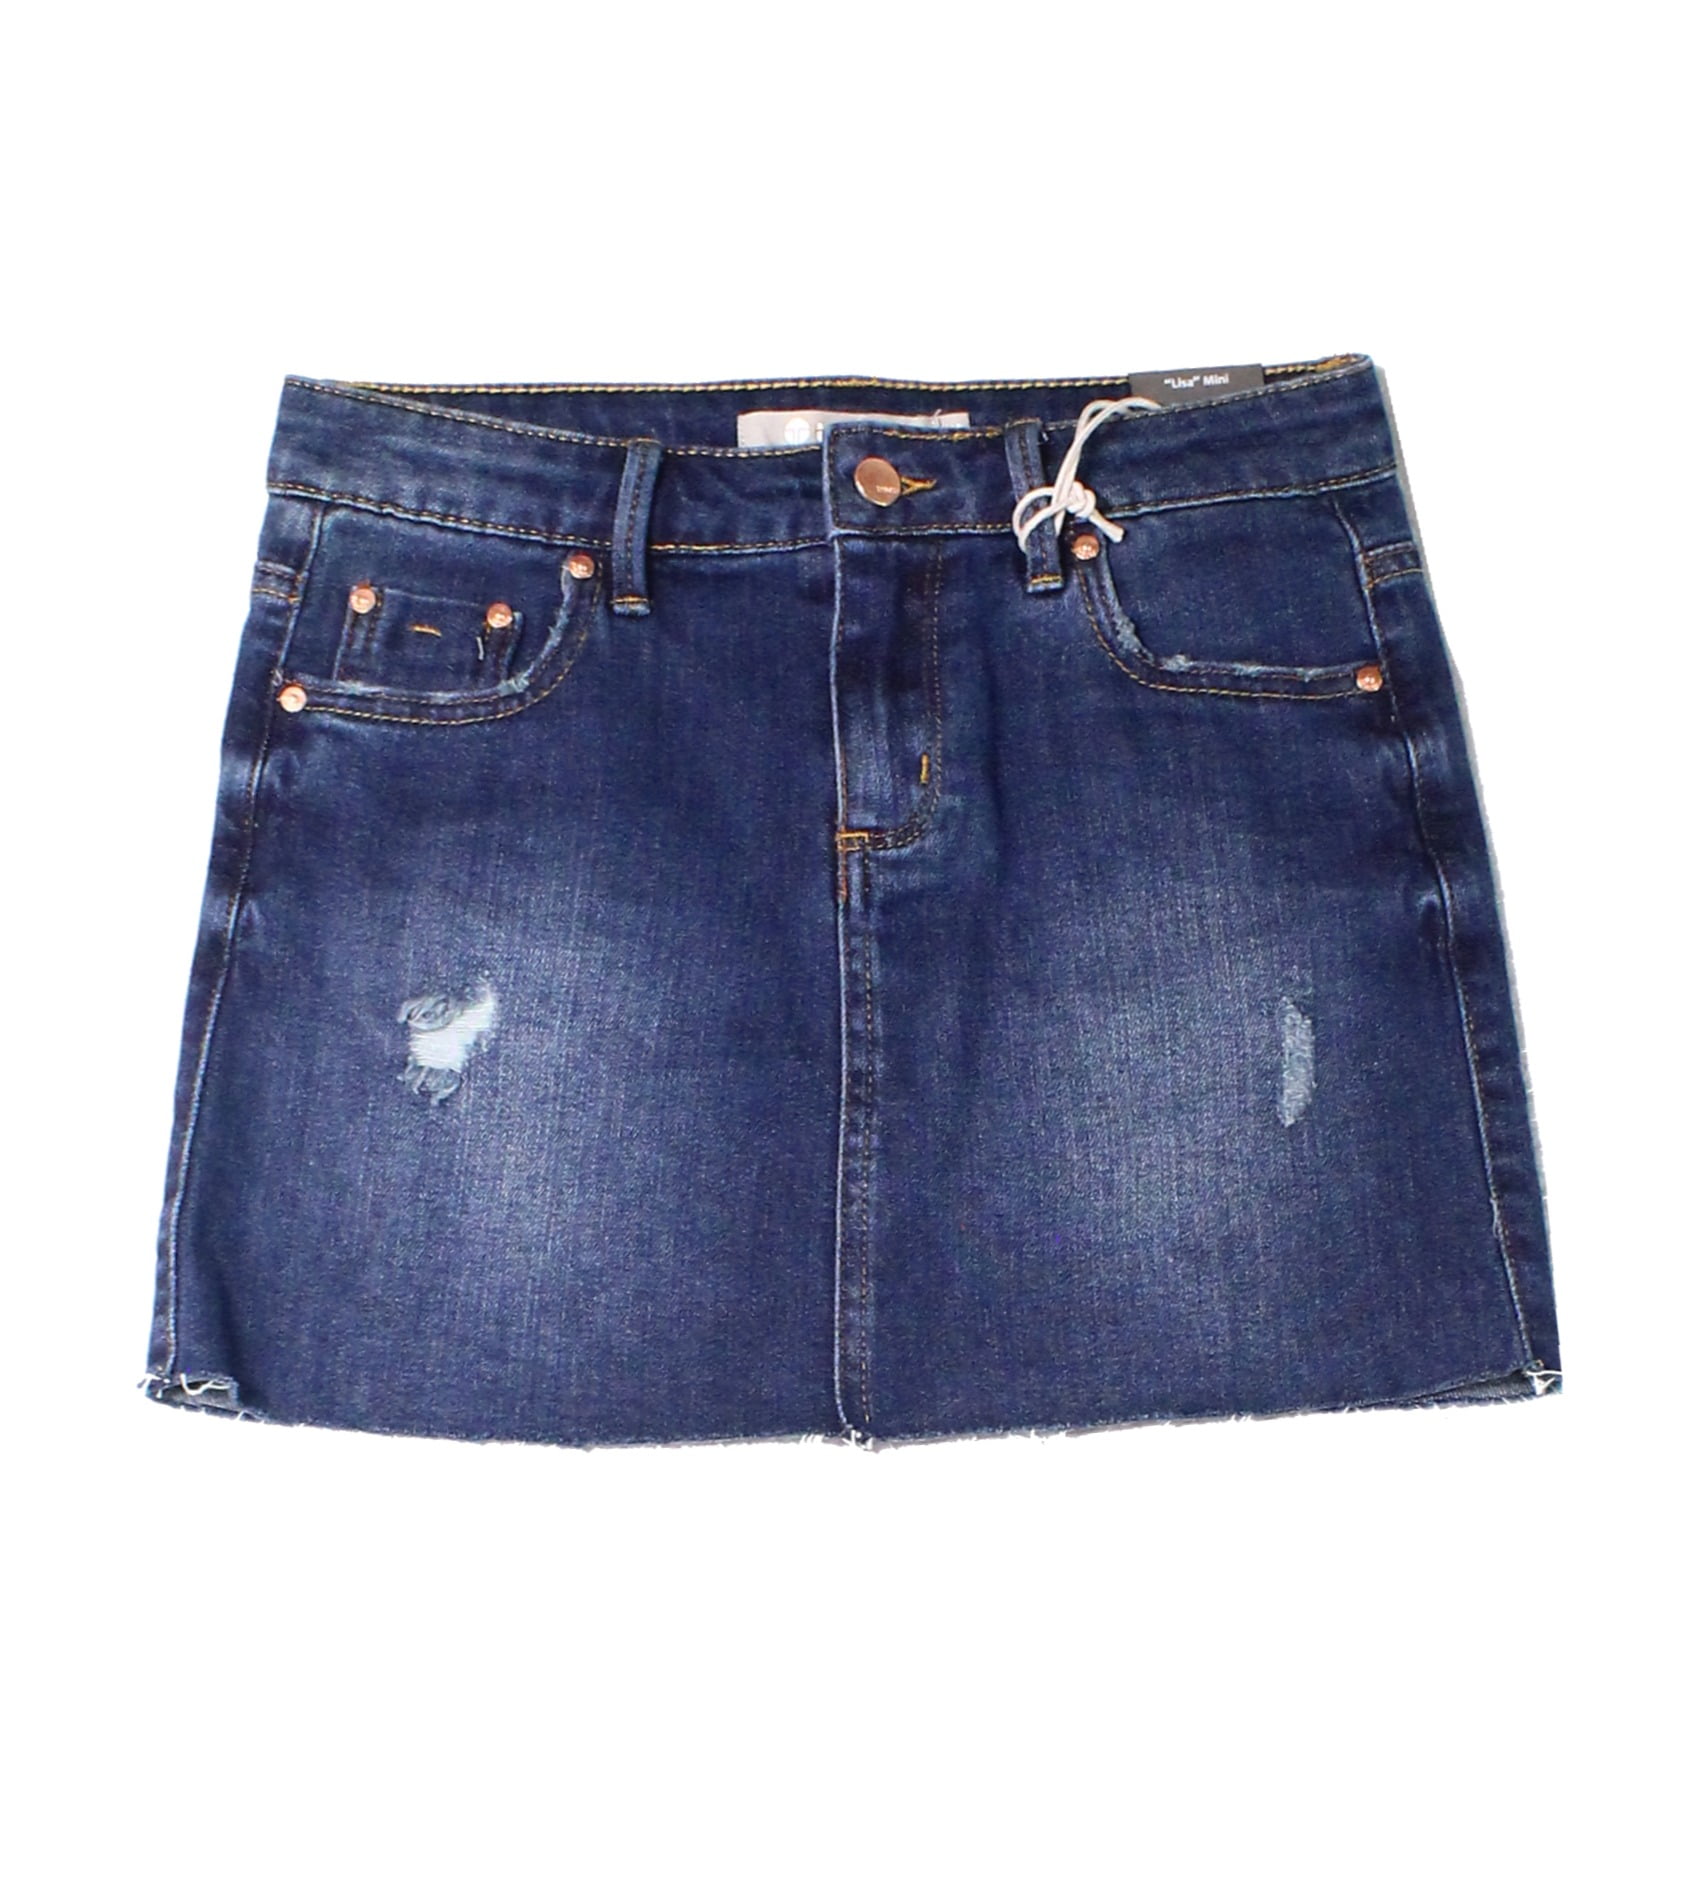 Girls Skirt Large Denim Distressed Button-Front L - Walmart.com ...